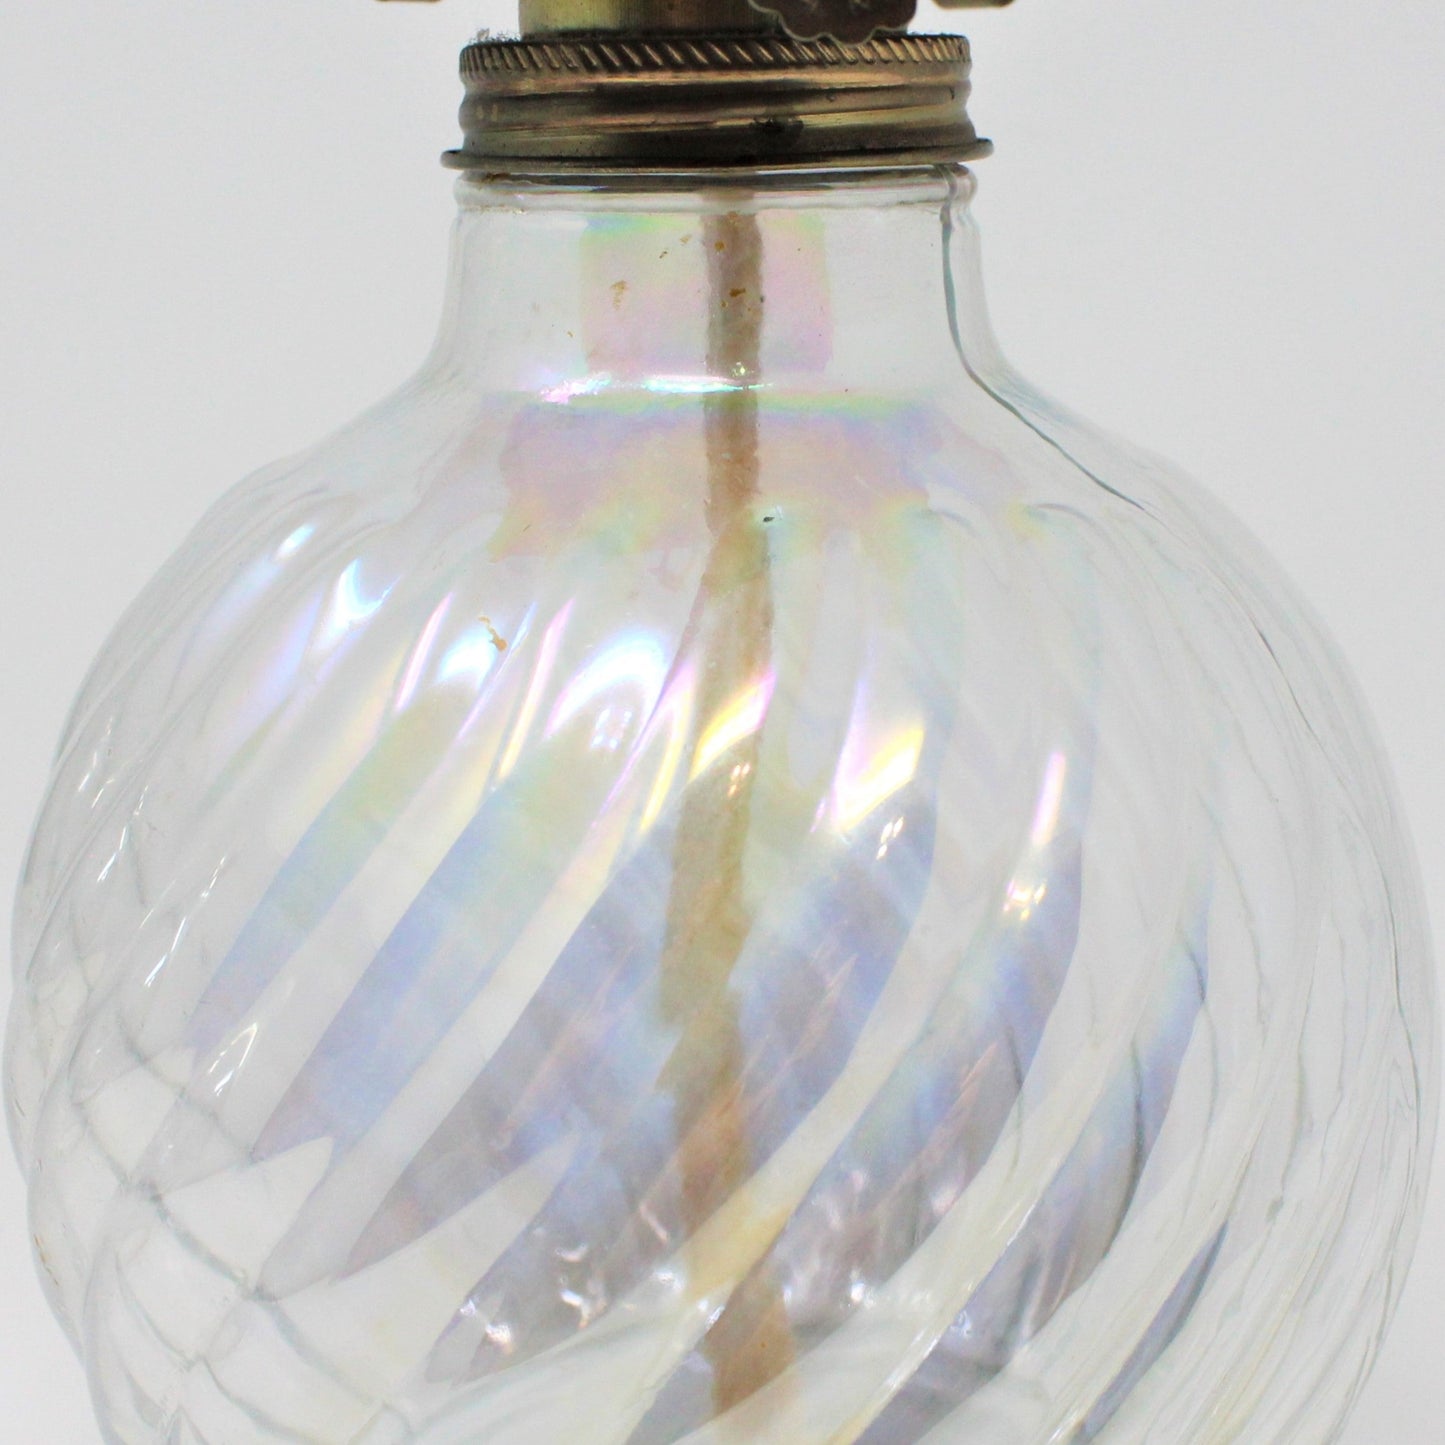 Oil Lamp, Iridescent Swirled Glass, Hong Kong, Vintage